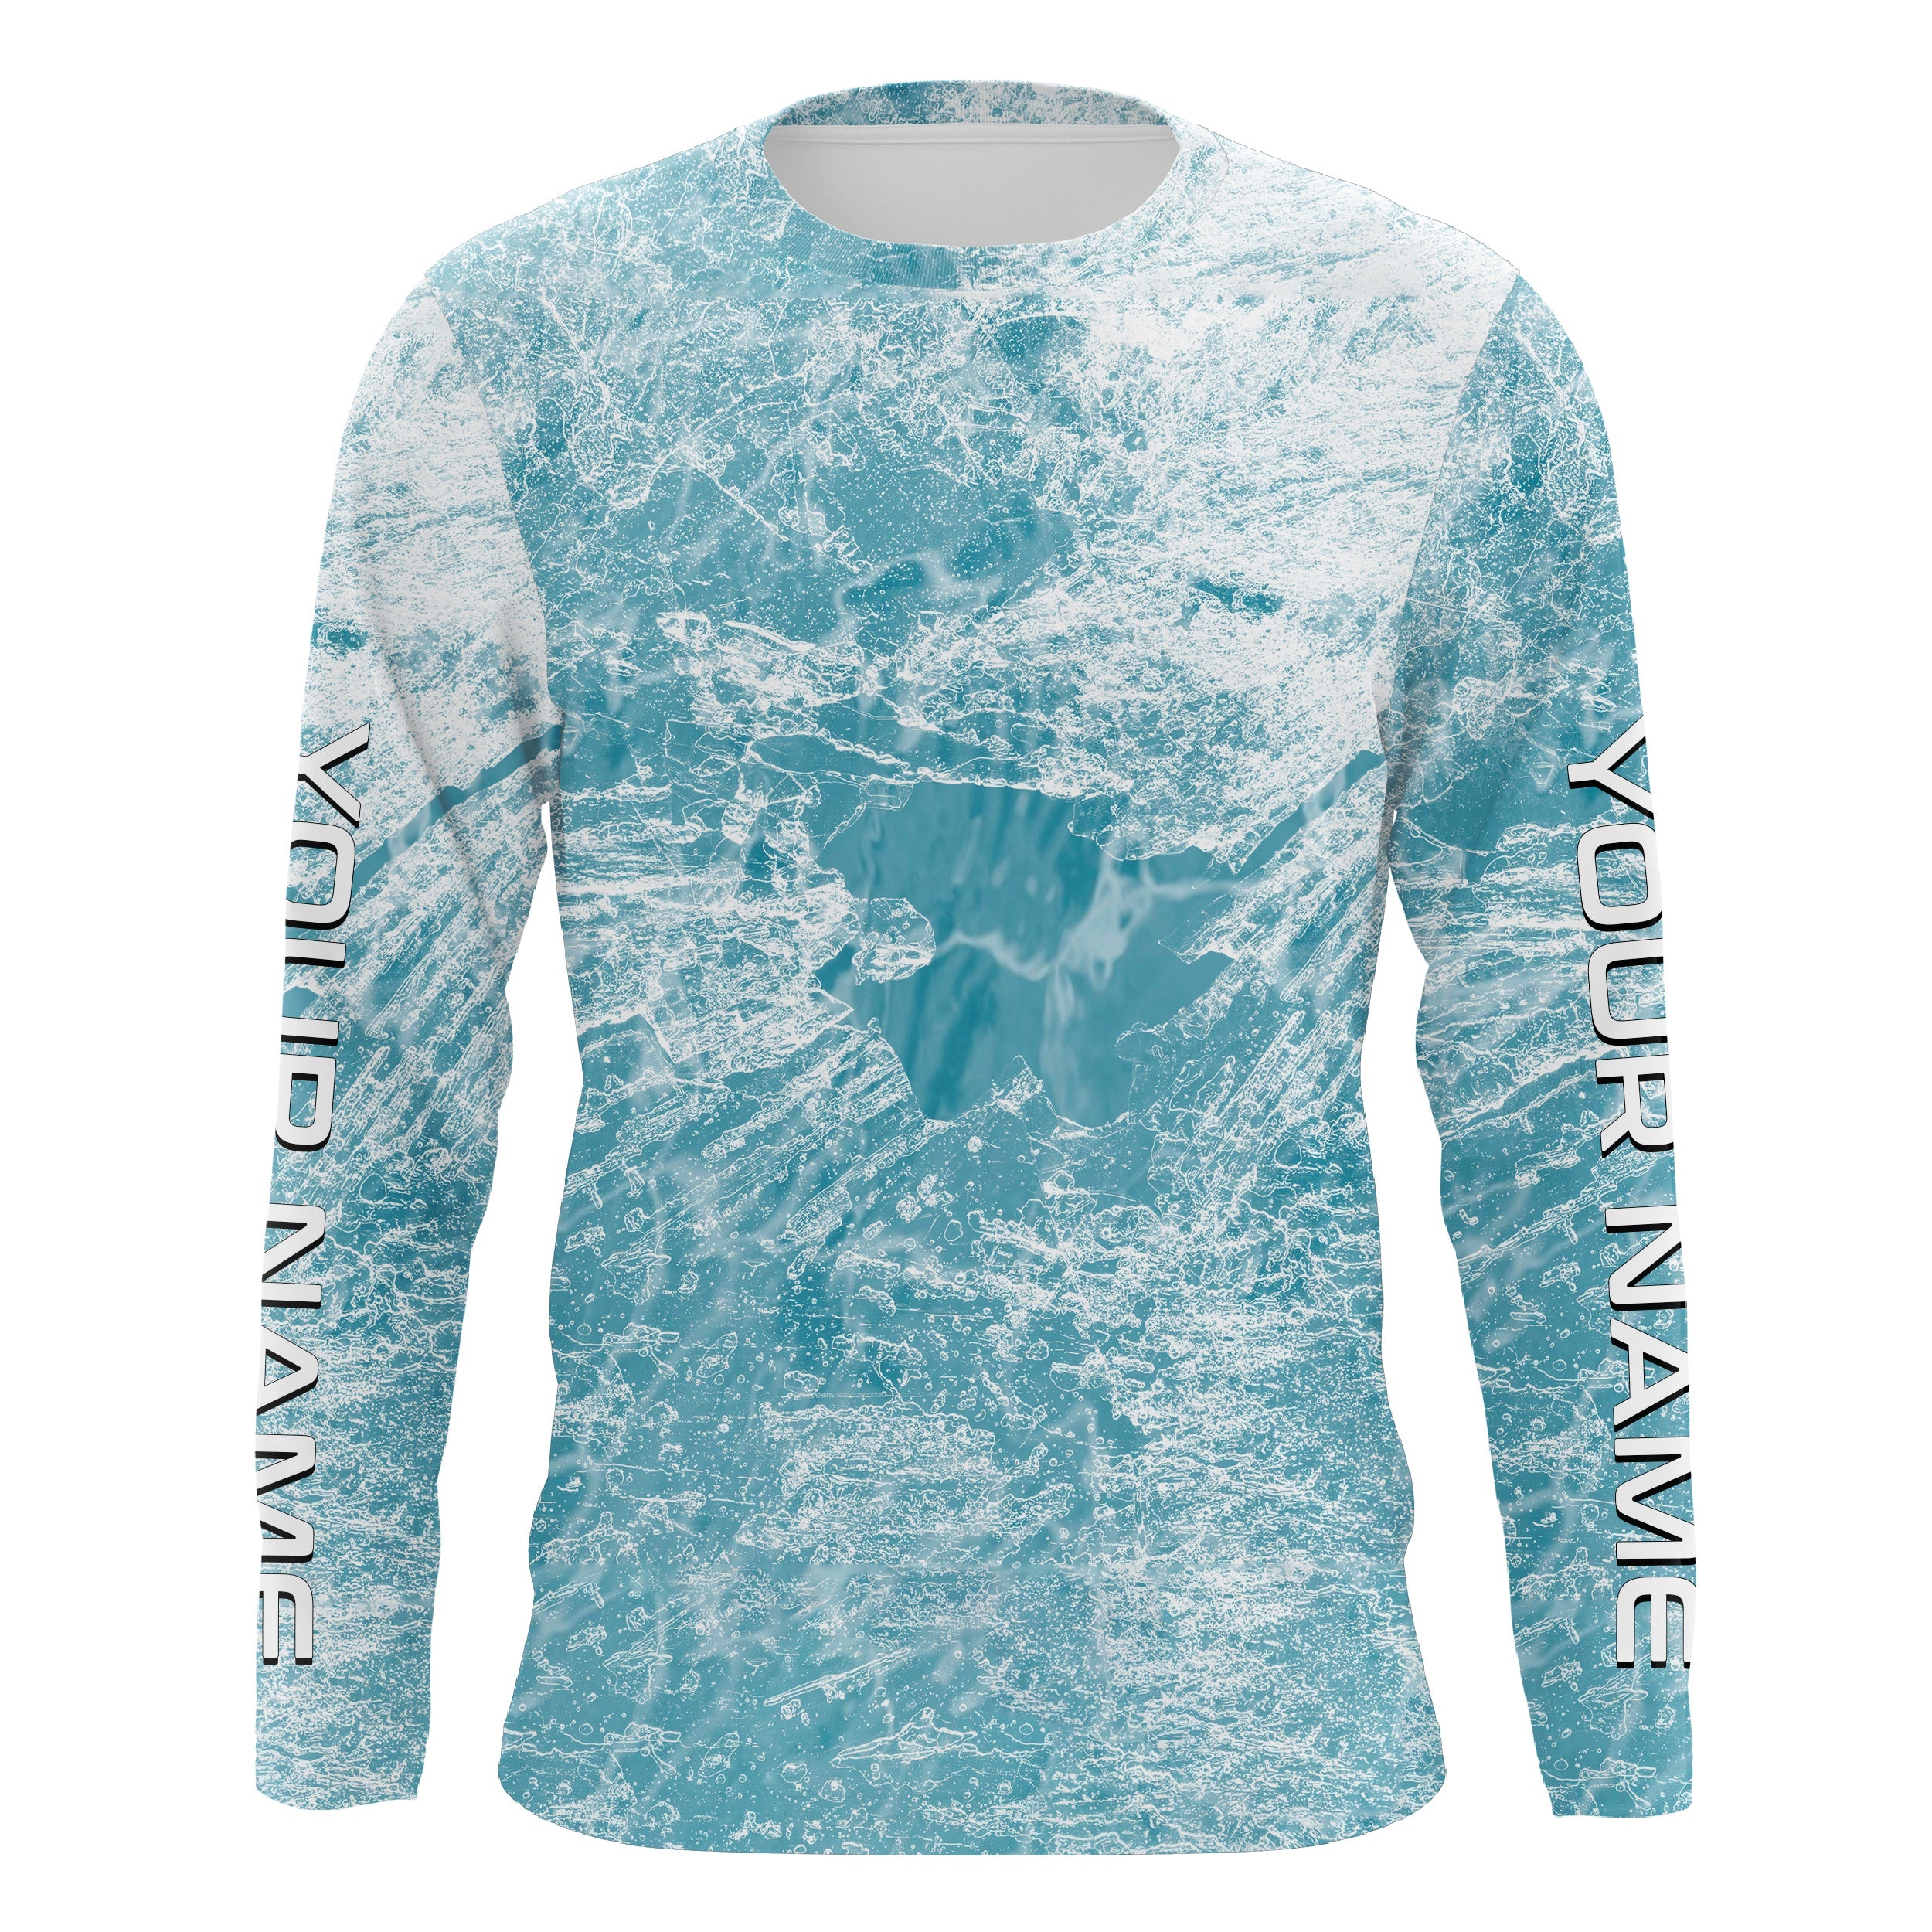 Ice camo Ice Fishing Shirts, Personalized Ice Fishing Clothing for